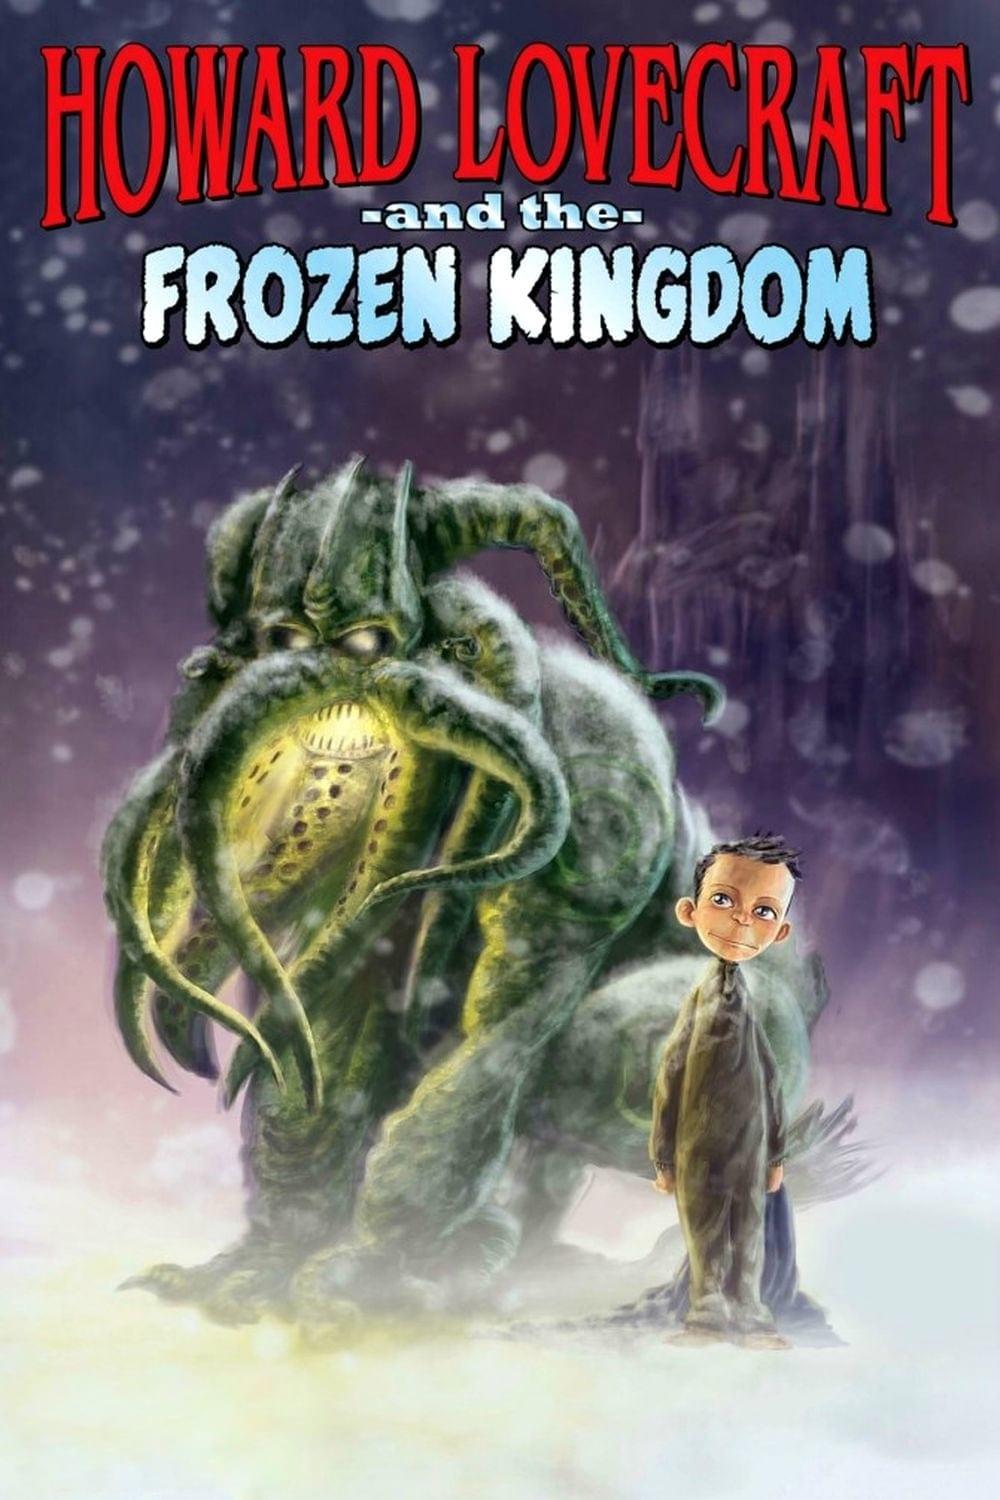 Howard Lovecraft & the Frozen Kingdom poster